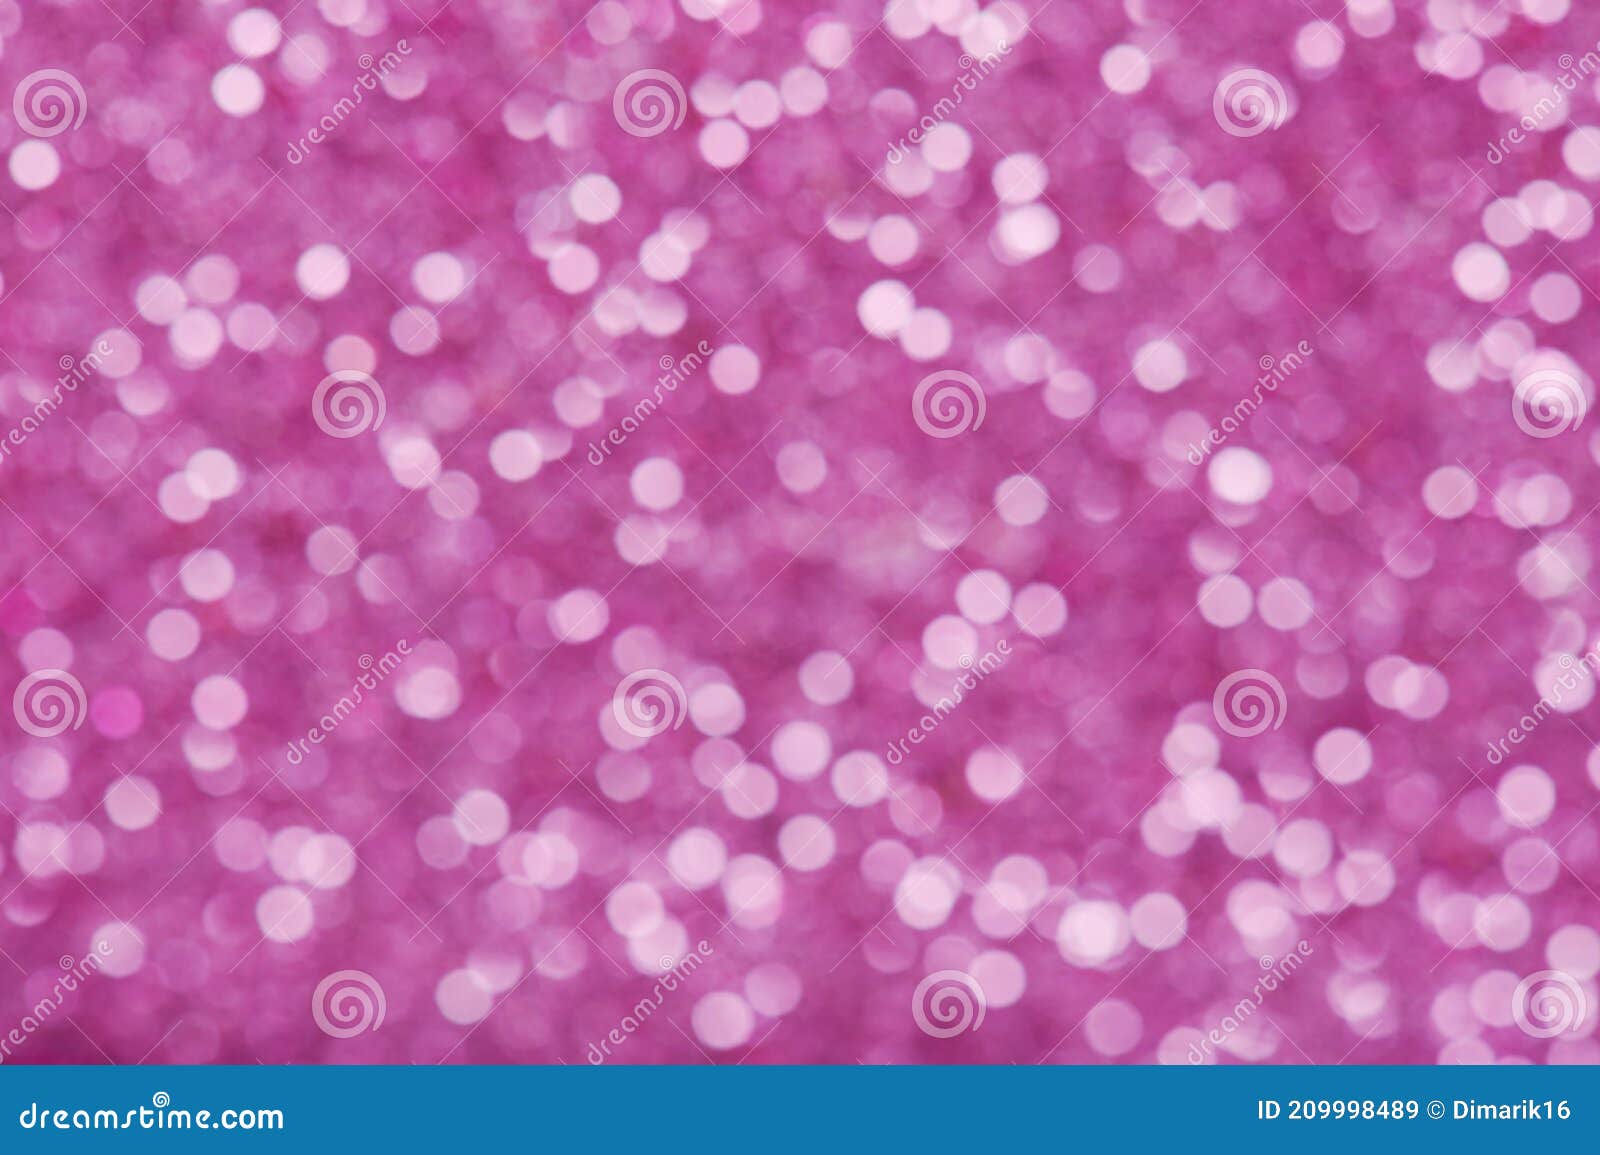 Blurred Pink Glitter Background Stock Image - Image of light, luxury ...